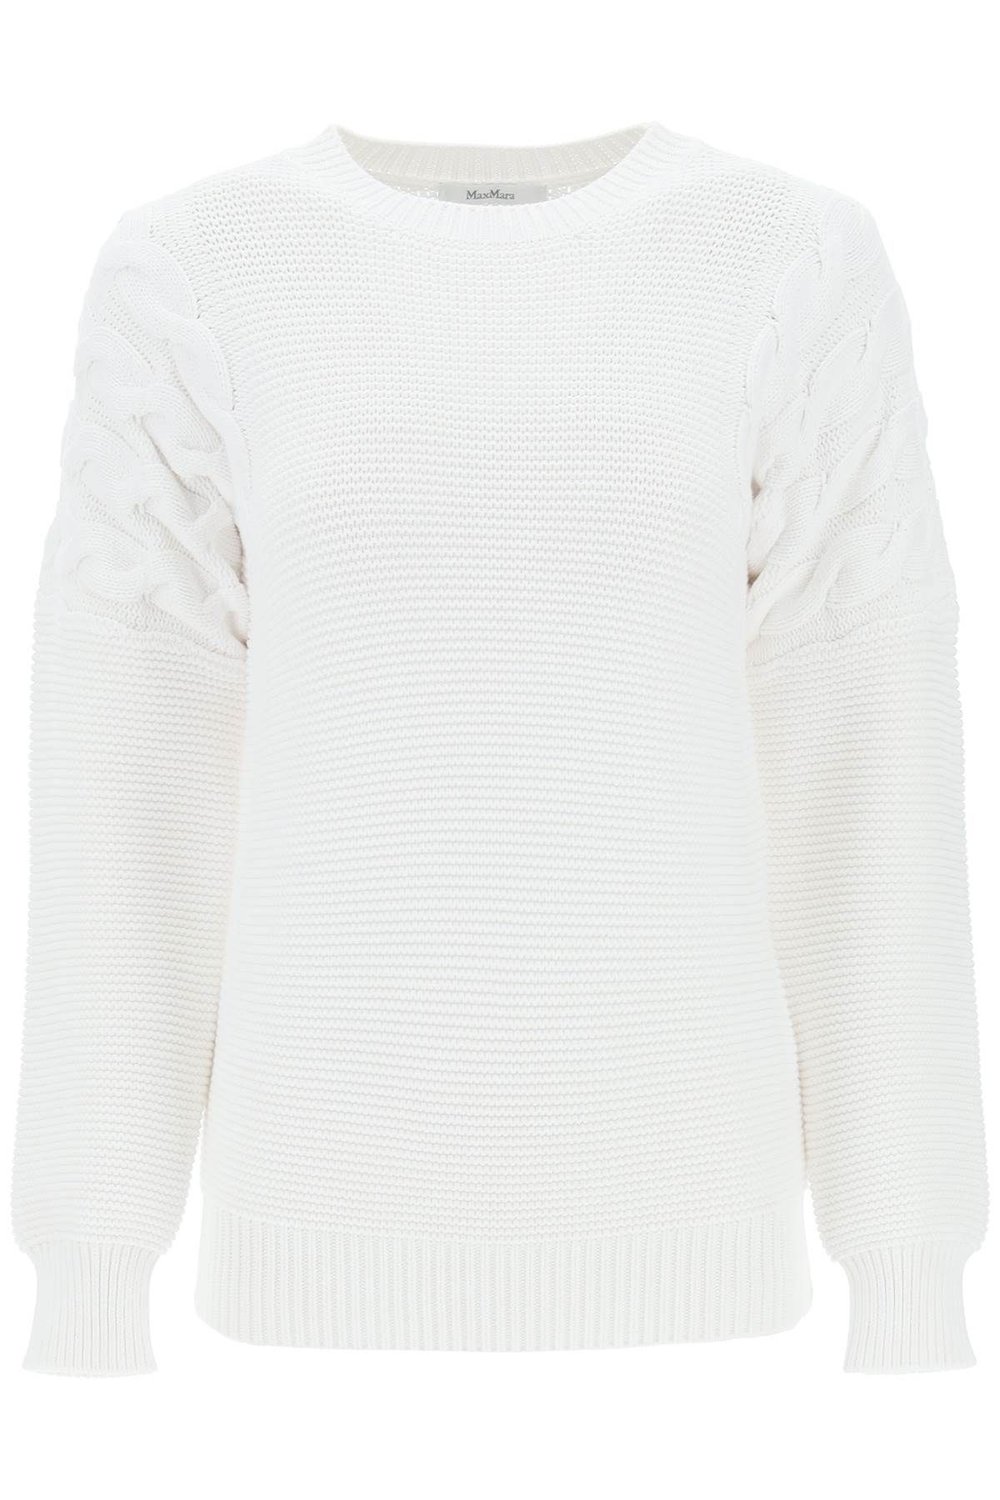 White pullover